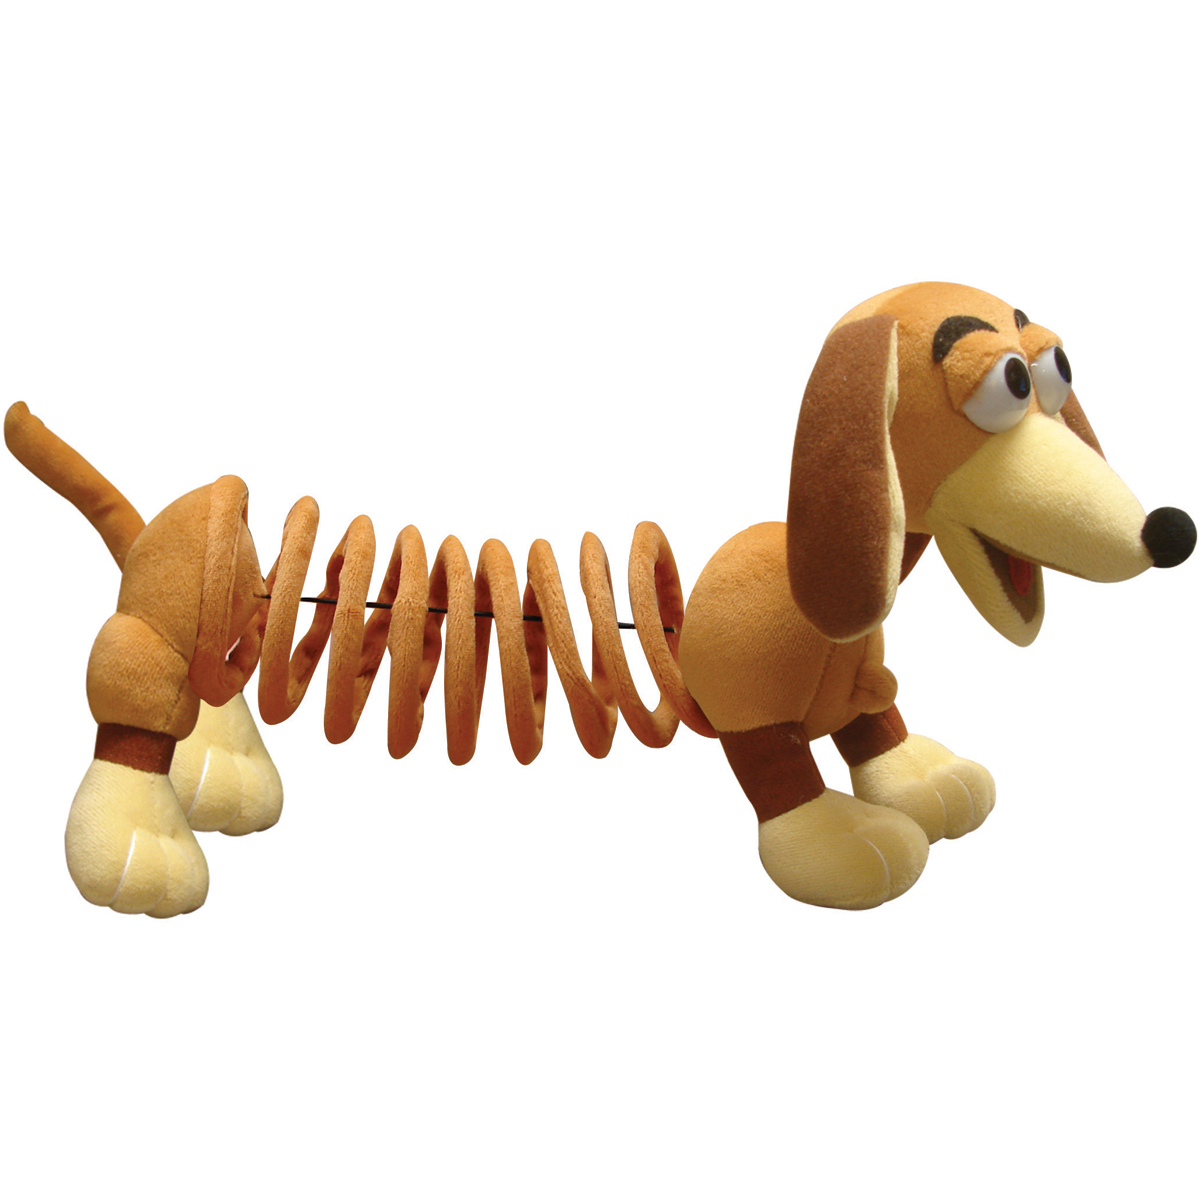 Slinky Disney Pixar Toy Story 3 Slinky Dog - image 3 of 3